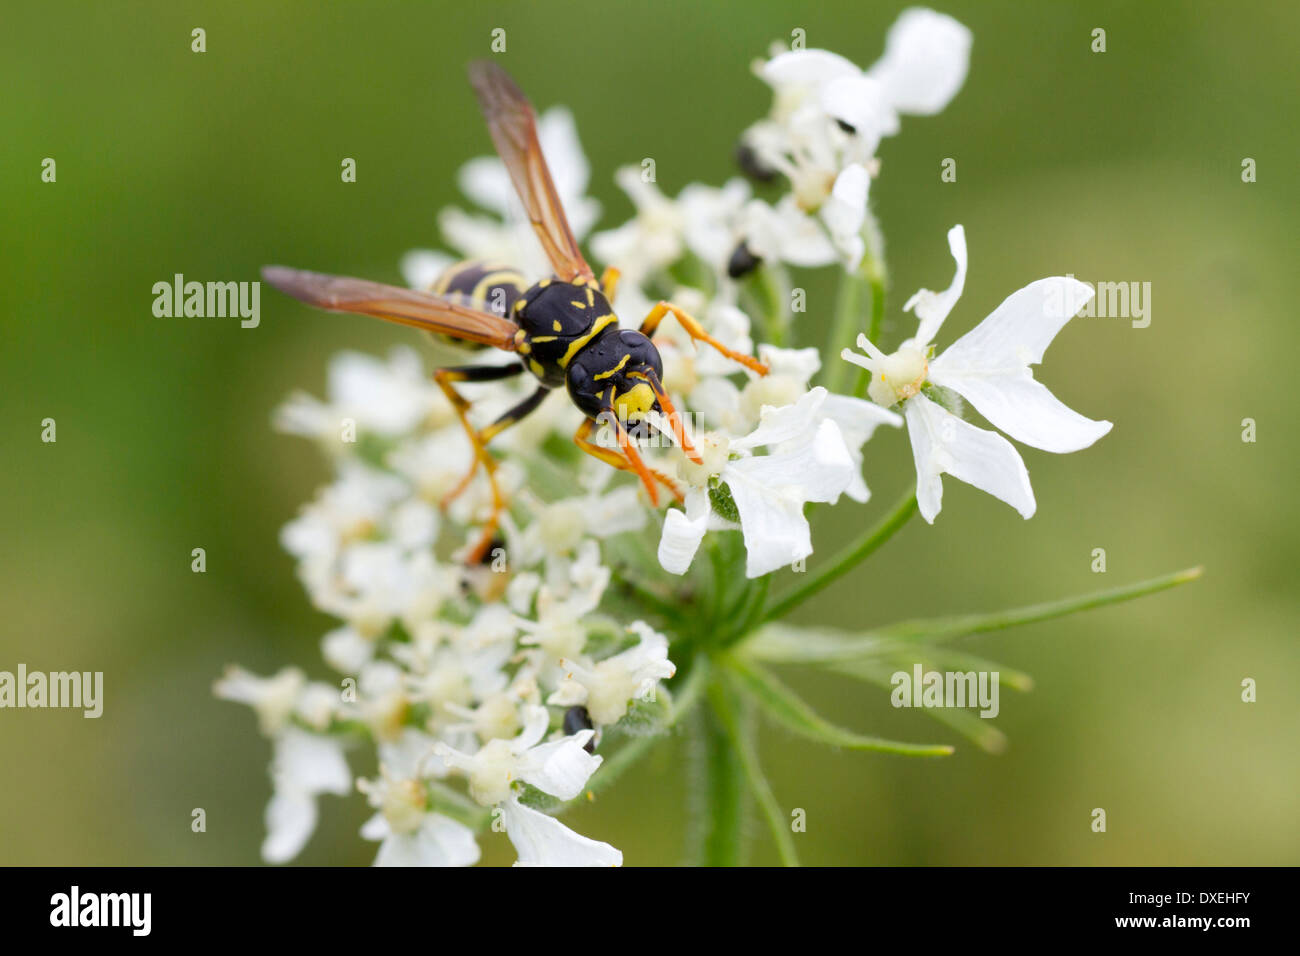 European Paper Wasp (Polistes dominula, Polistes gallica) on white flowers. Germany Stock Photo